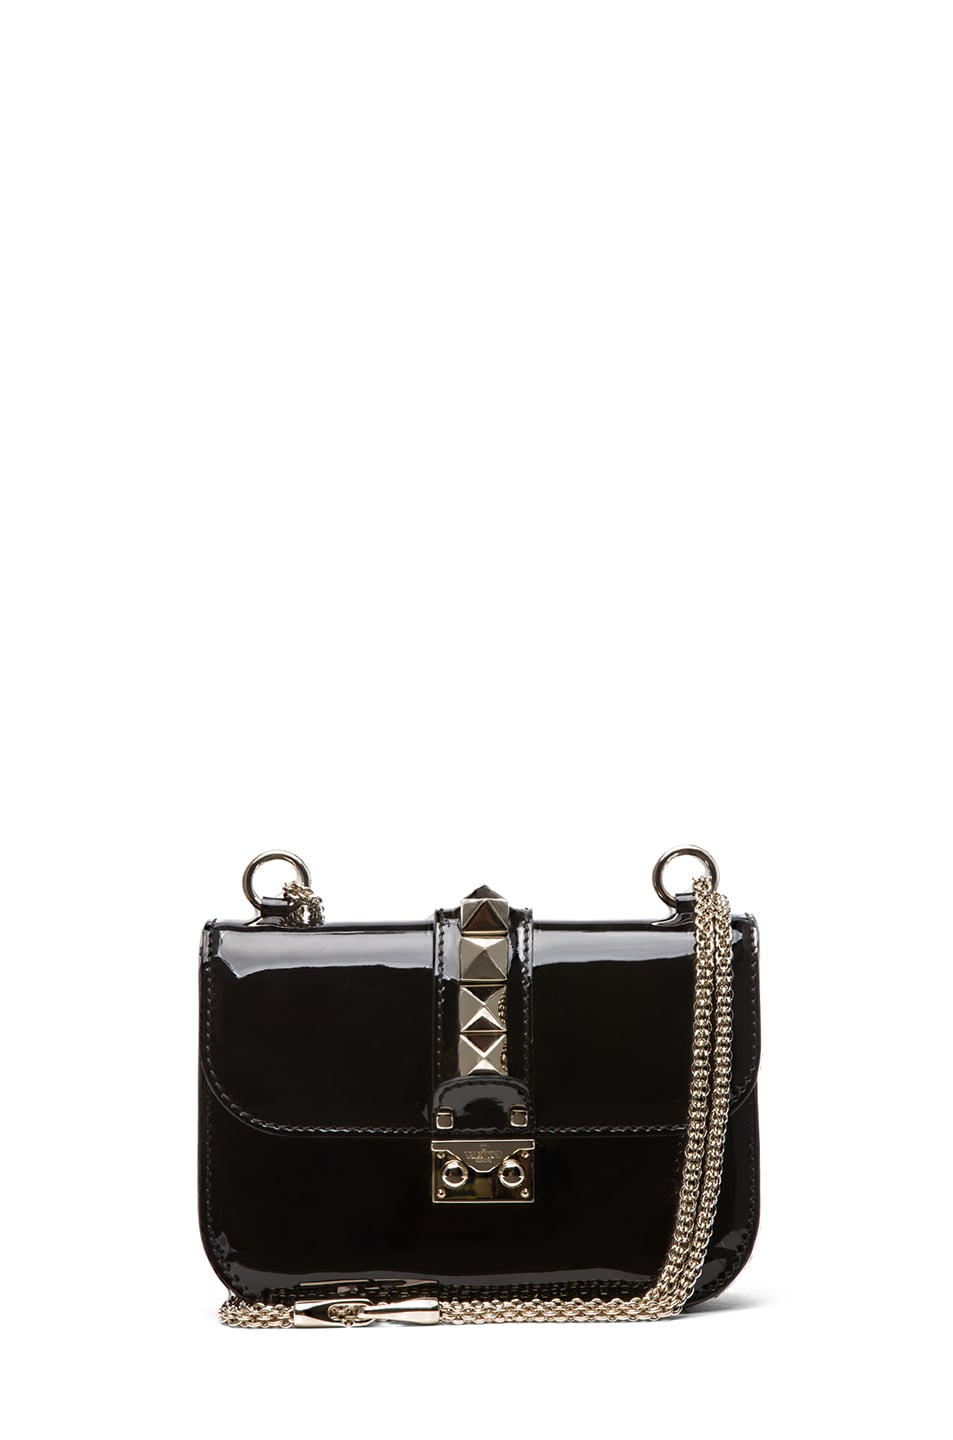 Valentino Small Lock Flap Bag in Black | FWRD